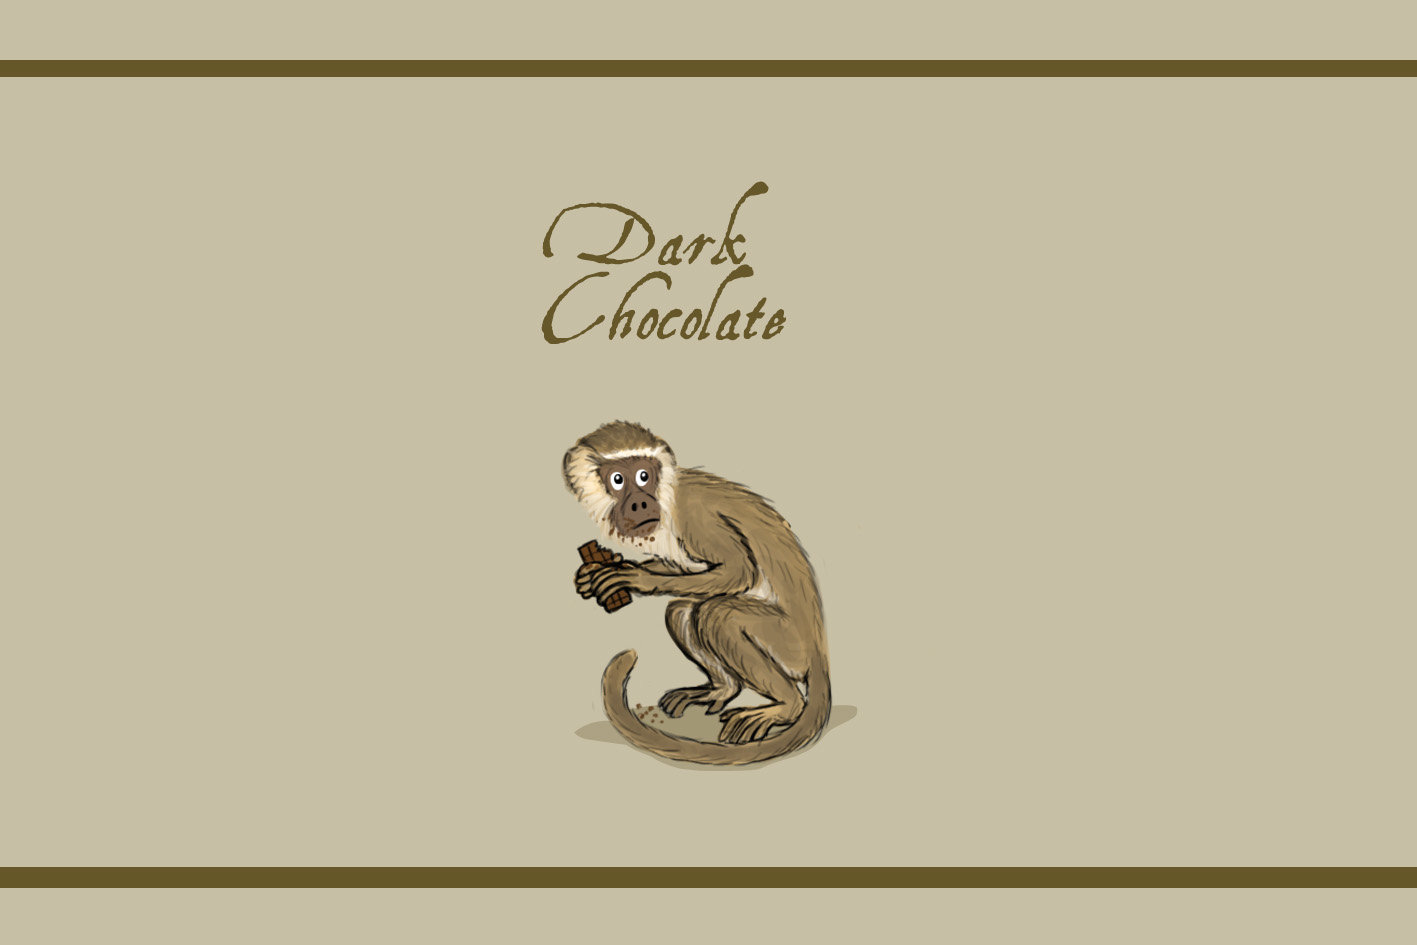 Chocolate wrapping - "Monkey chocolate" (2014)